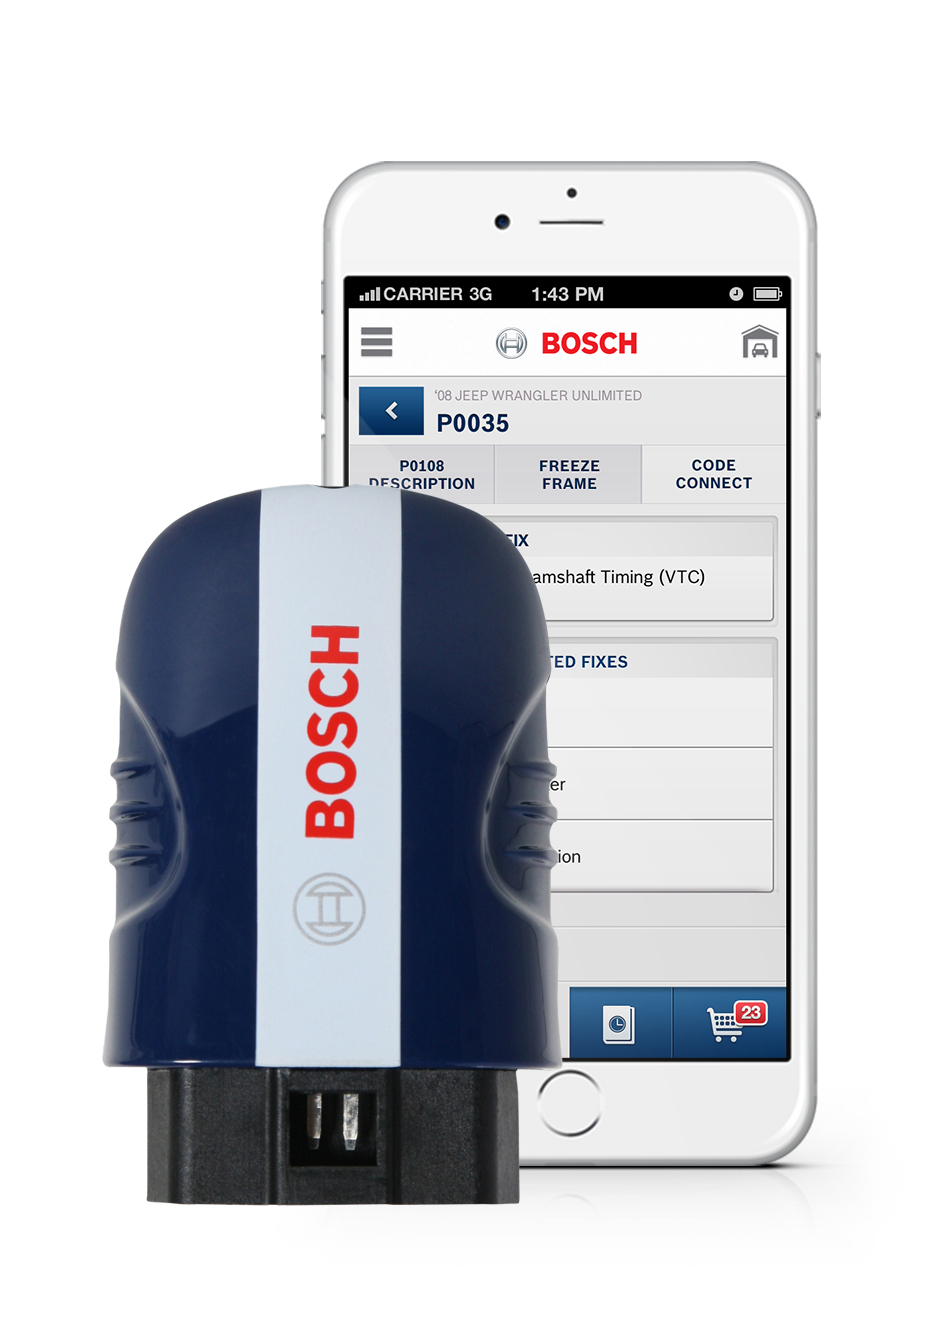 Bosch 1050 Mobile Scan Diagnostics | Bosch Diagnostics